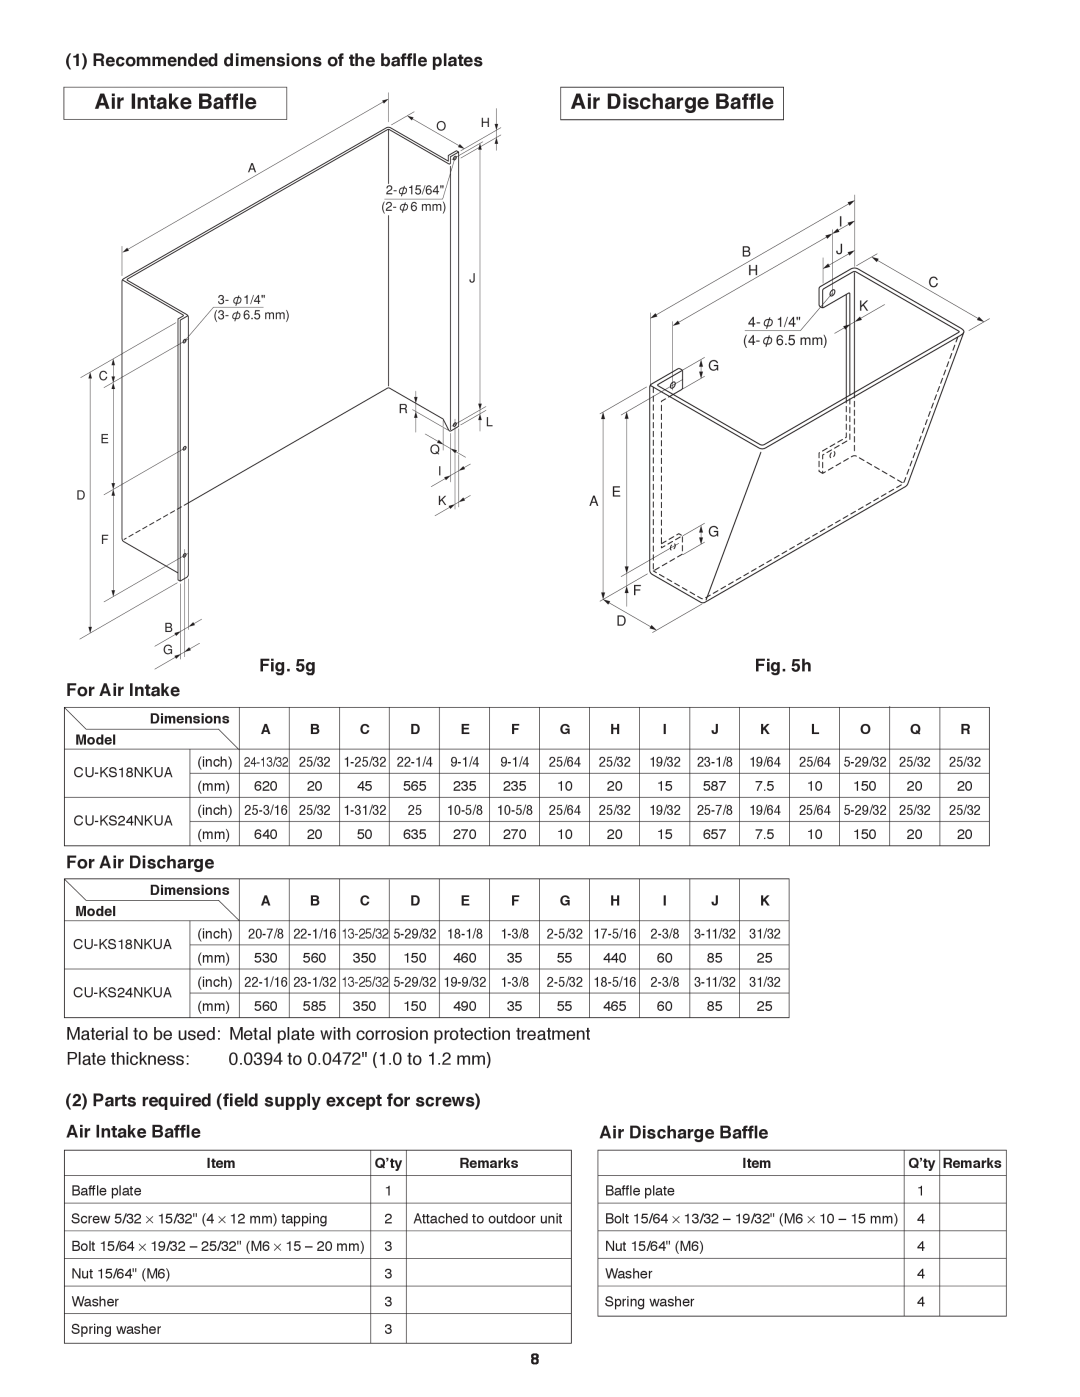 Panasonic CU-KS18NKU, CS-KS18NKU Air Intake Baffle, Air Discharge Baffle, Recommended dimensions of the baffle plates 